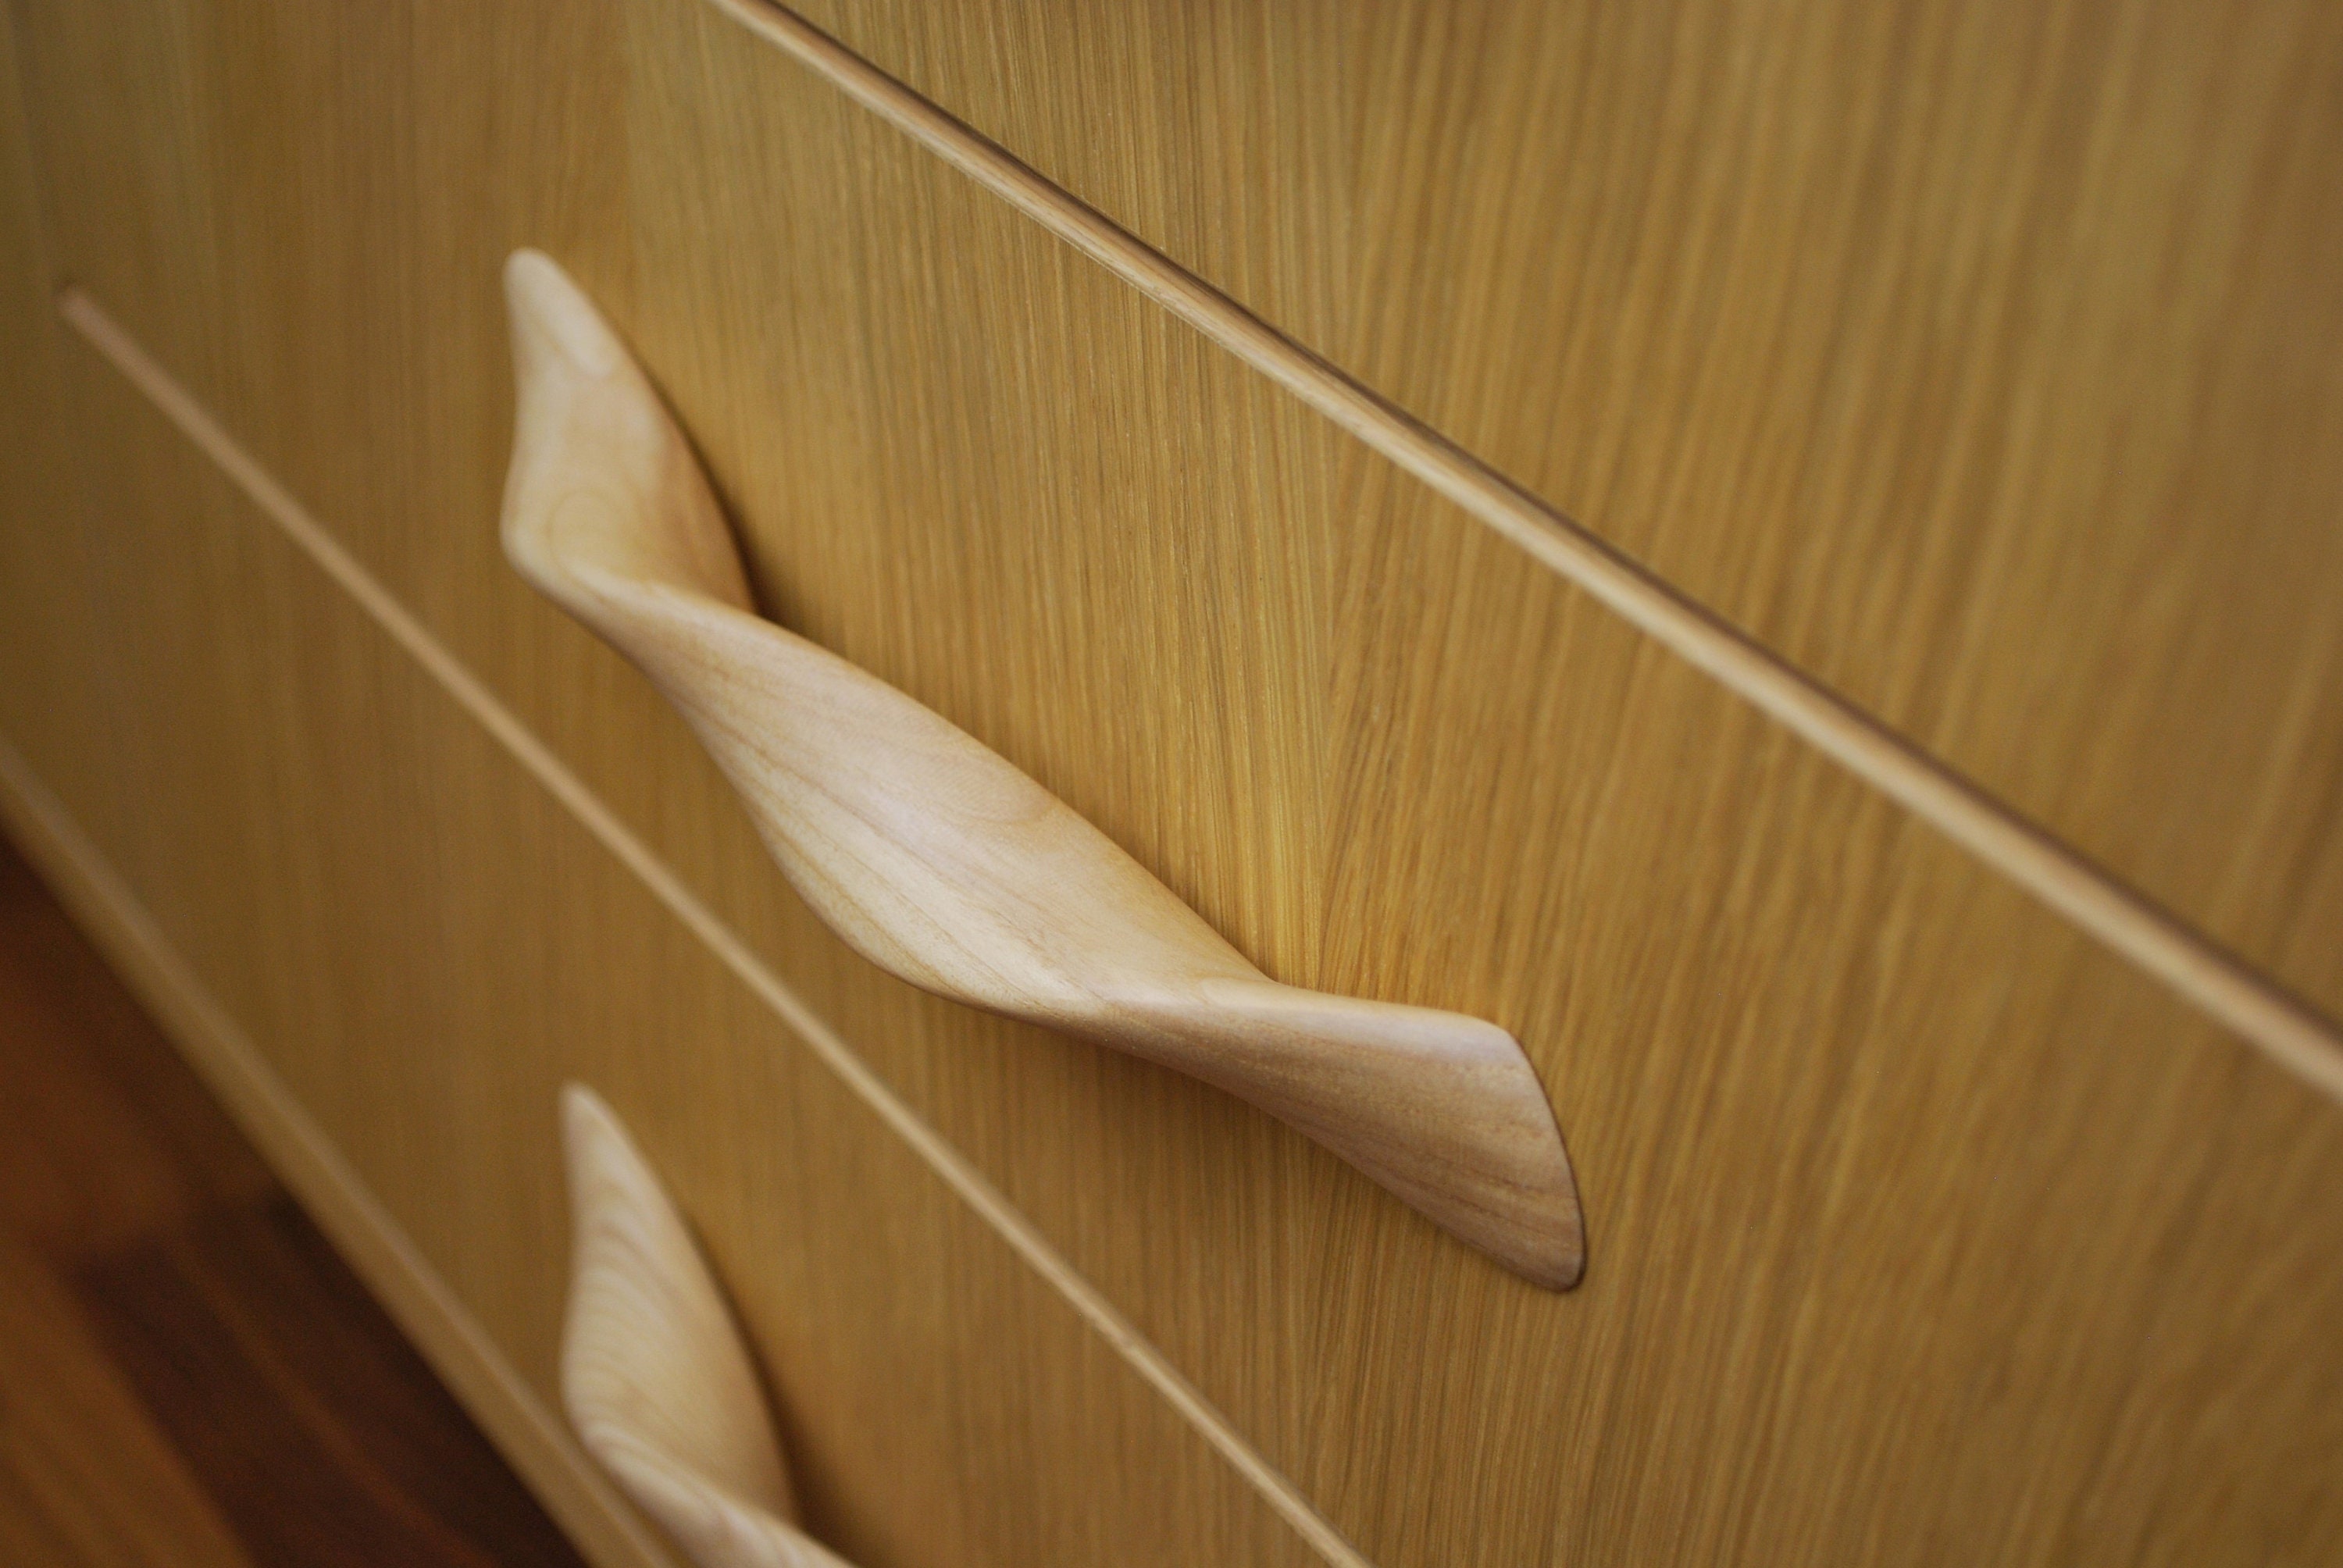 EXTRA LONG Wood Handle, Drawer Pulls, Minimalist Handles, Grips, Solid Wood,  Cupboard Handles, IKEA Furniture 